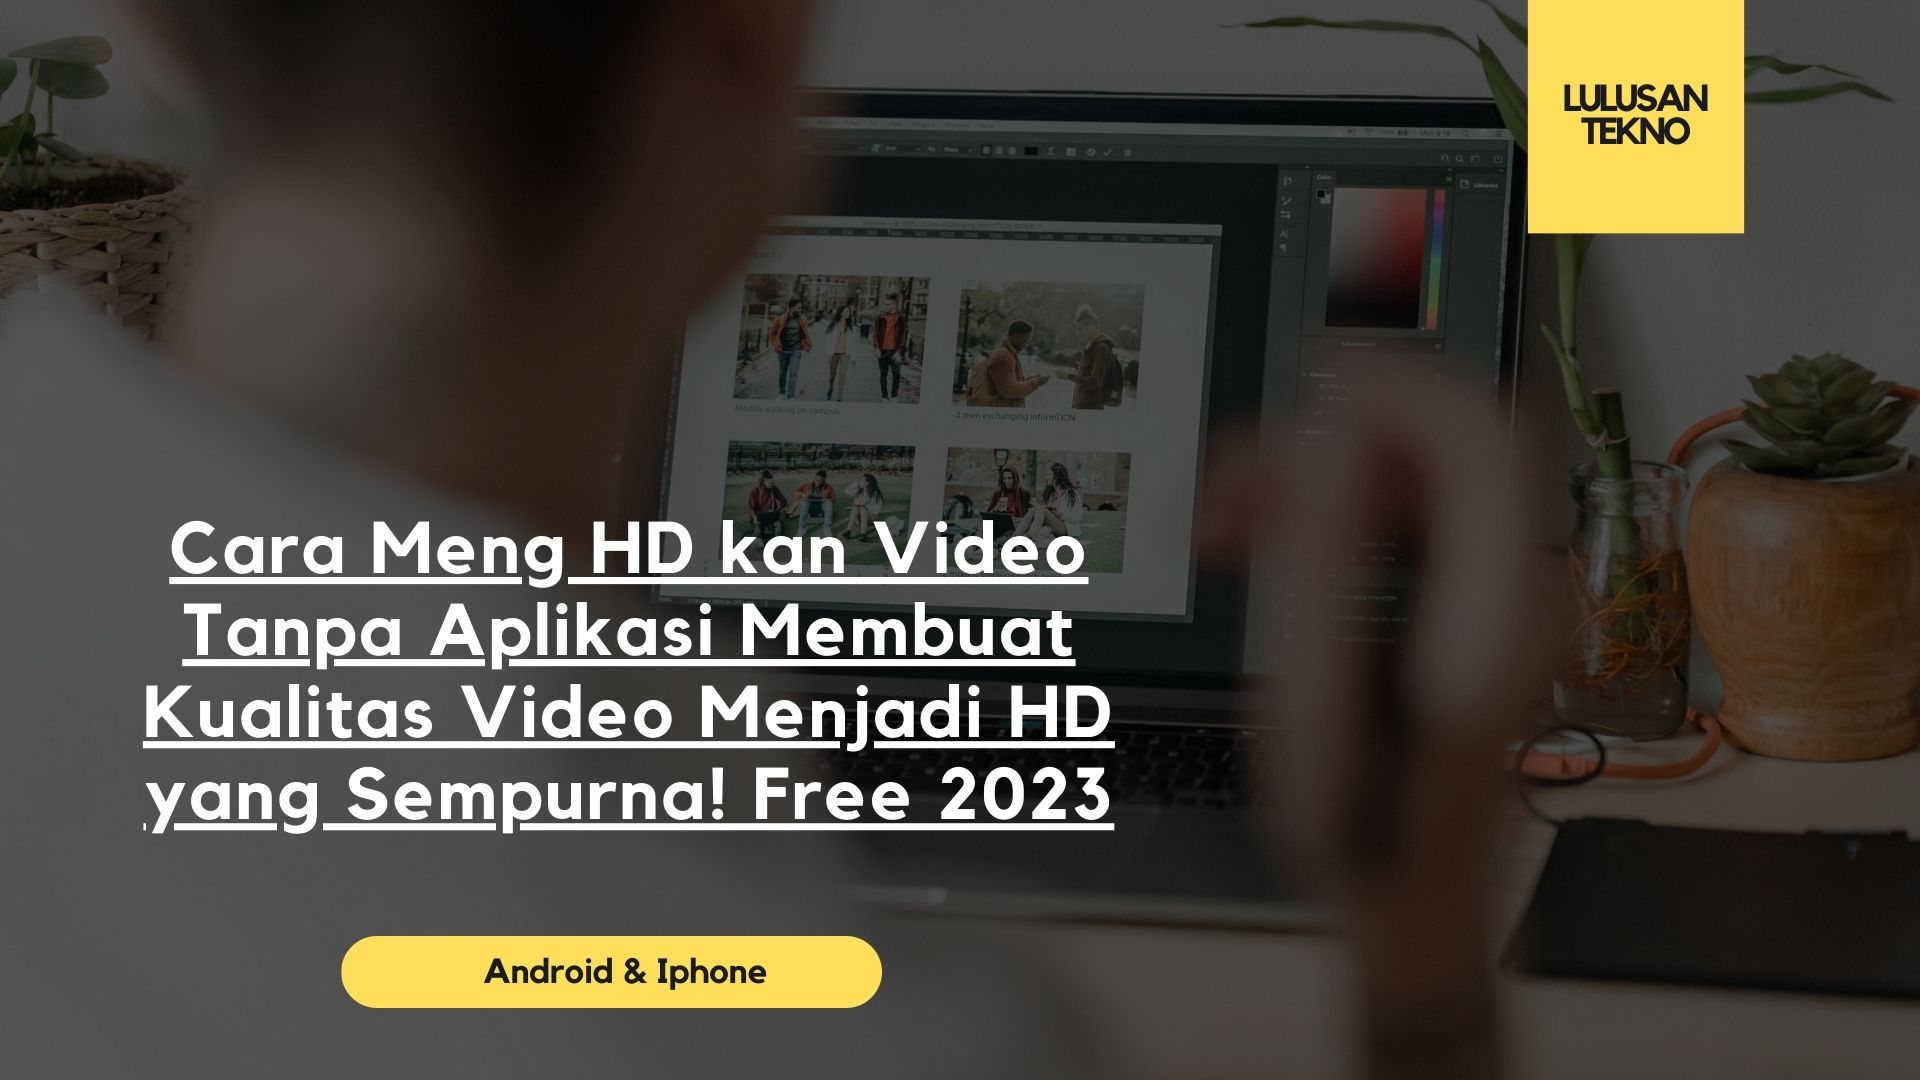 Cara Meng HD kan Video Tanpa Aplikasi Membuat Kualitas Video Menjadi HD yang Sempurna! Free 2023